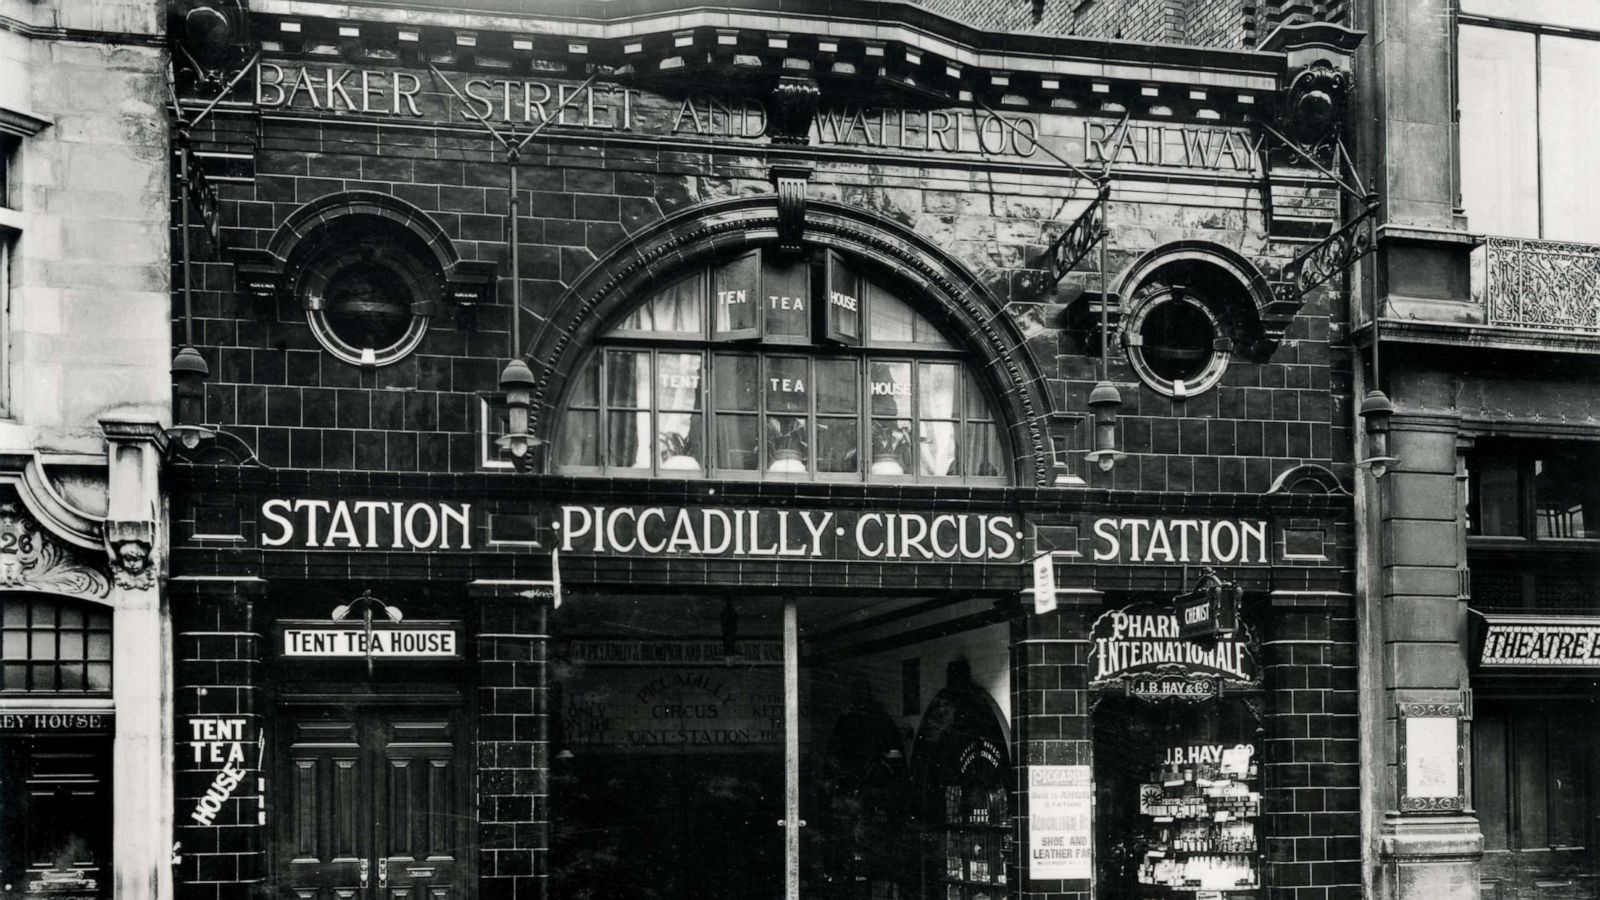 Piccadilly Circus Railway Station Photo London Underground. 2 